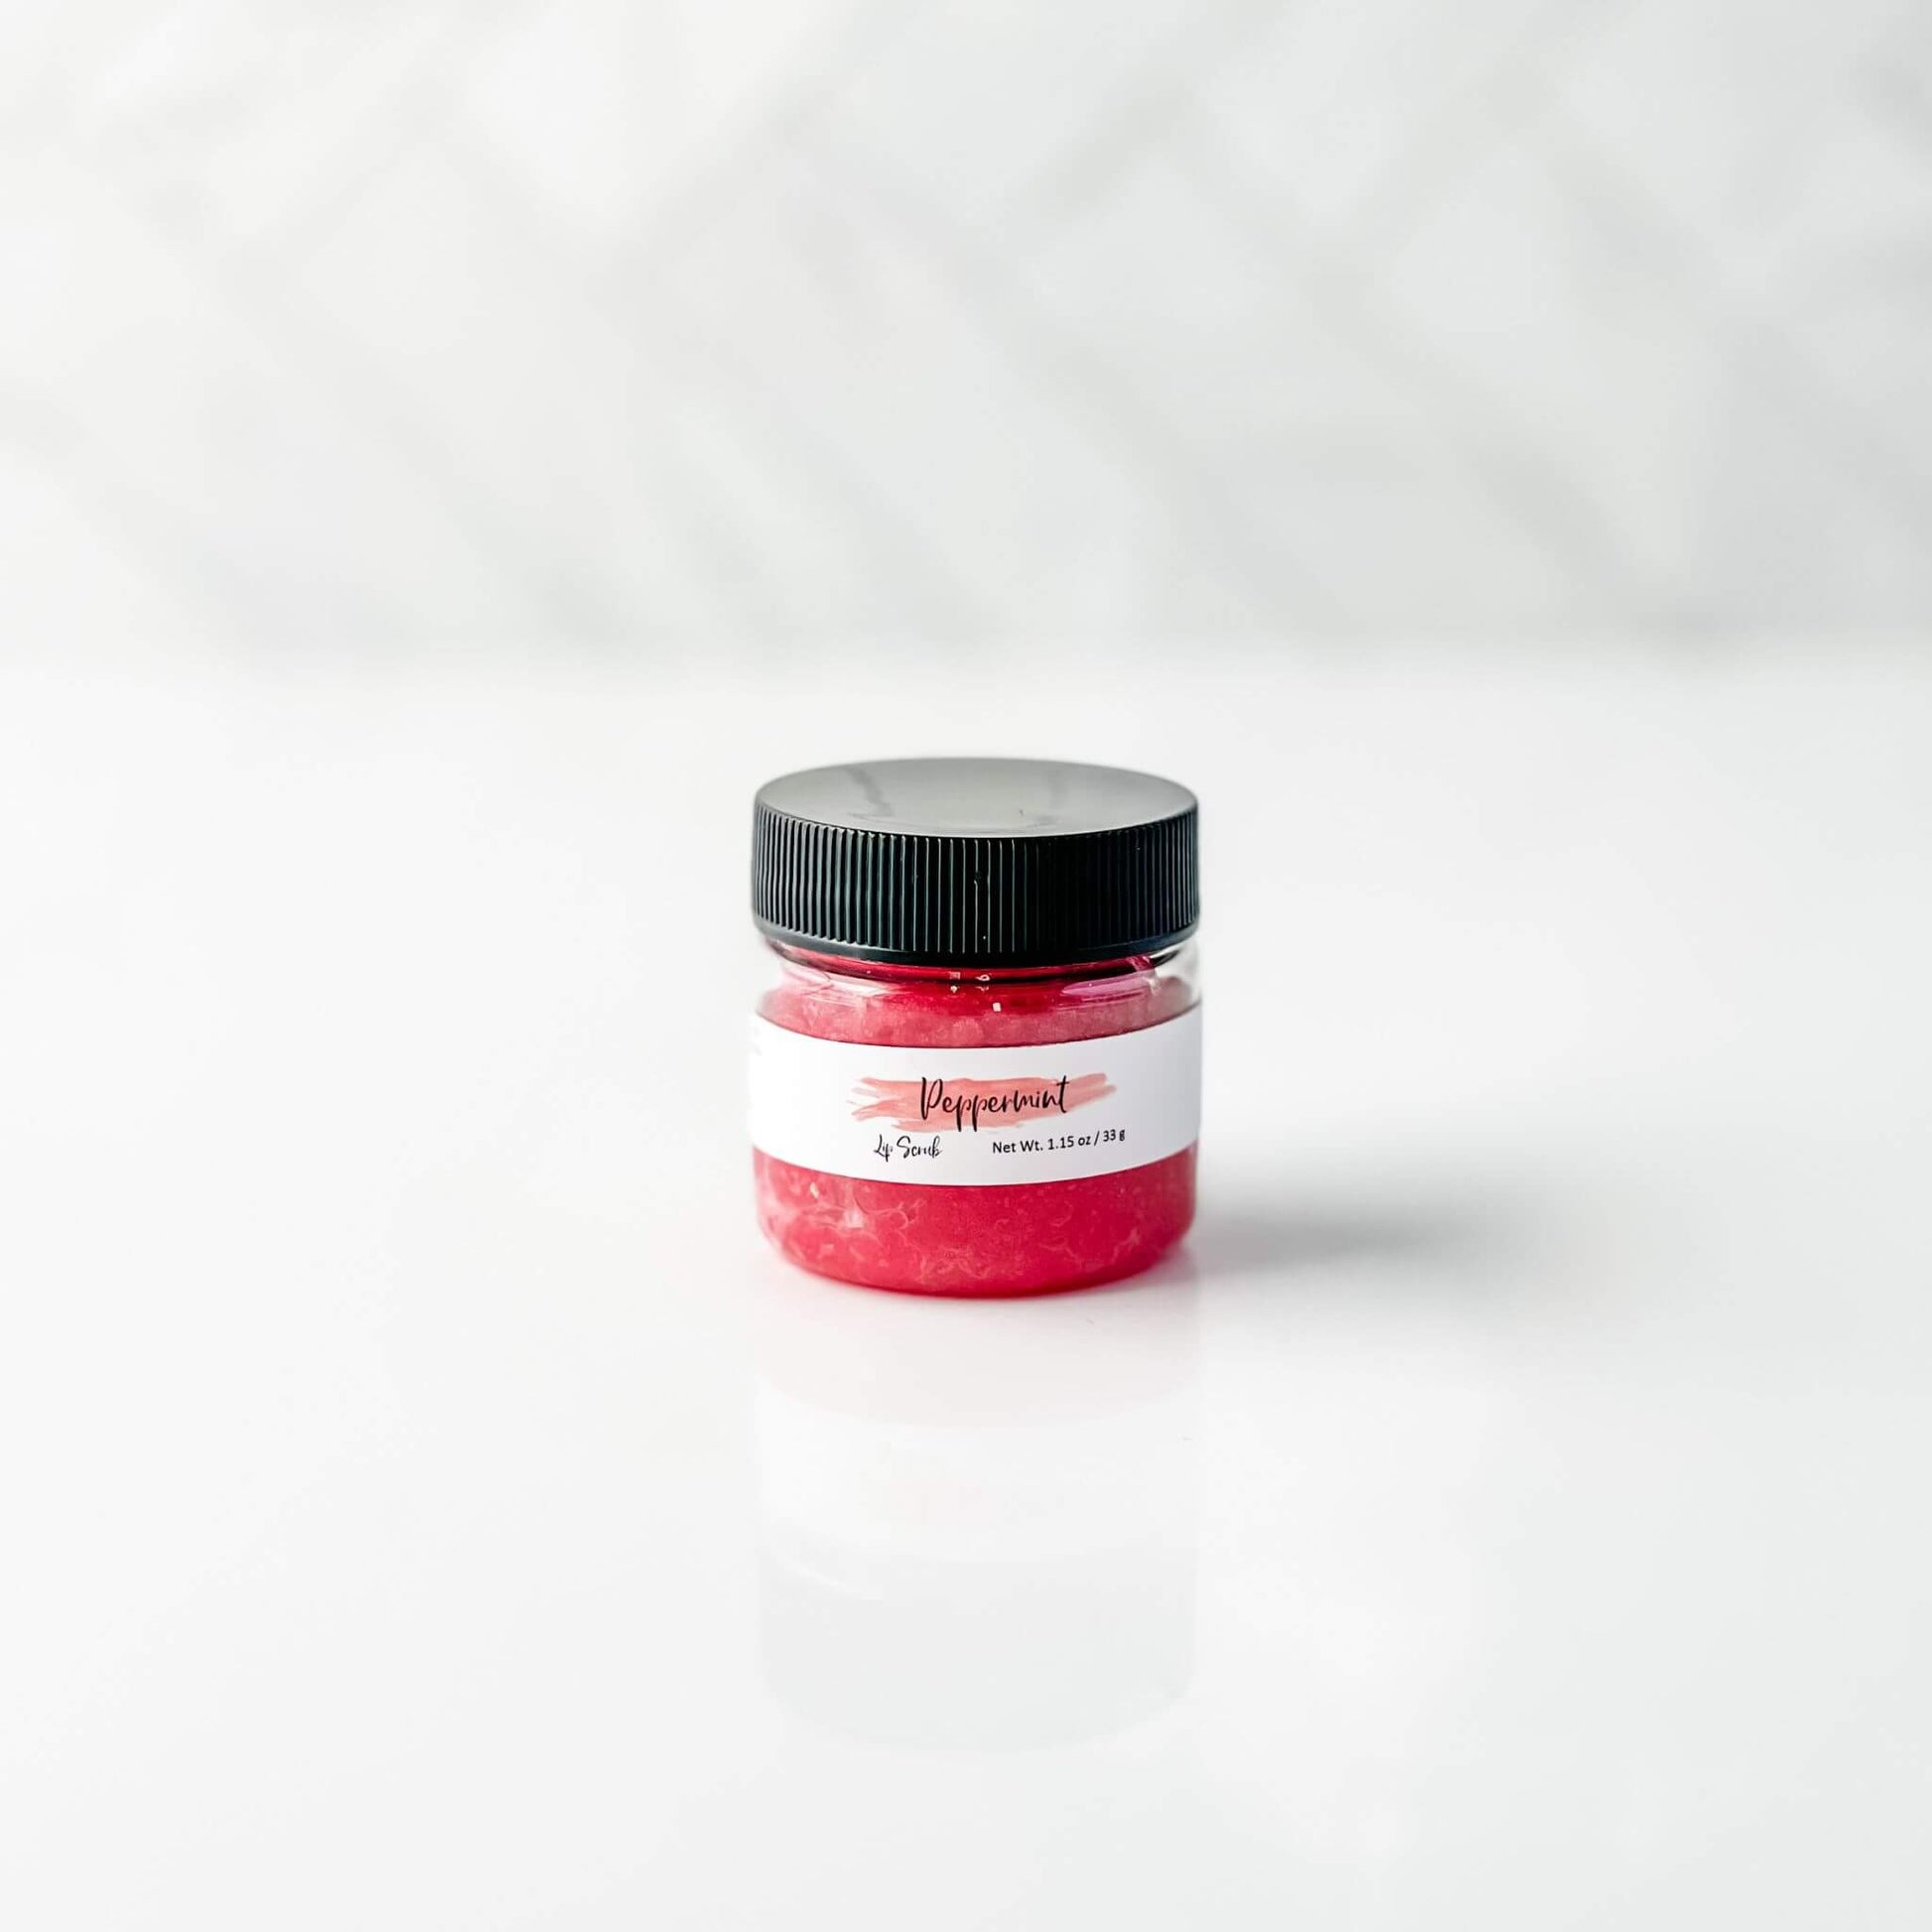 Lip Scrub 1 oz jar Peppermint flavor (color red)